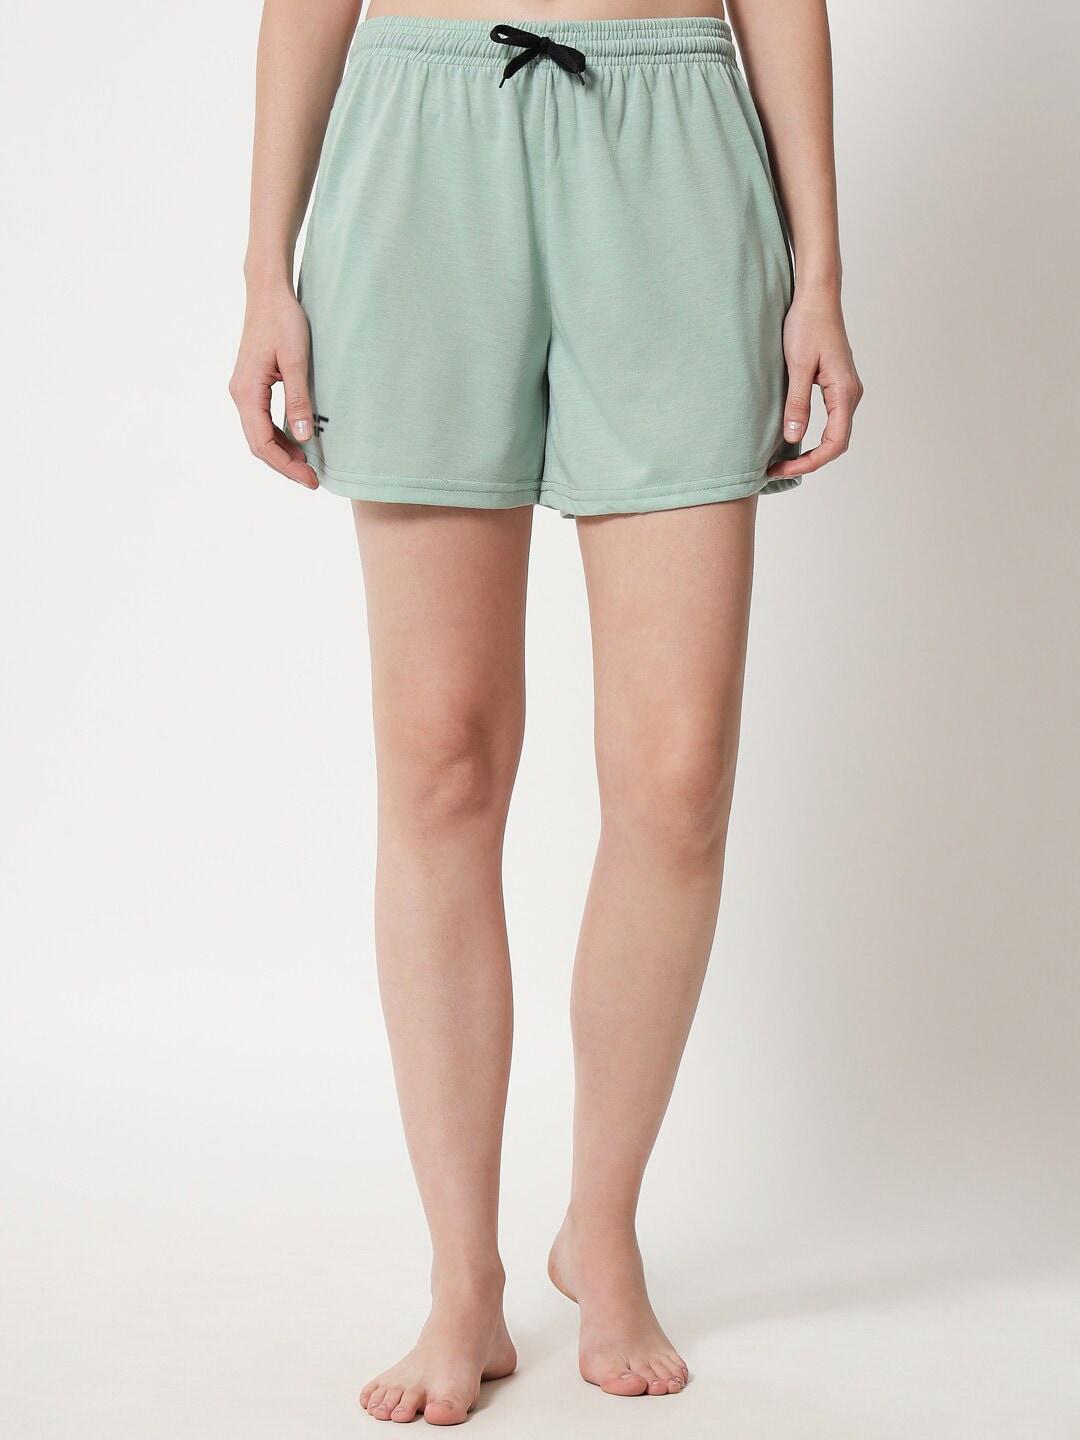 fflirtygo-women-green-shorts